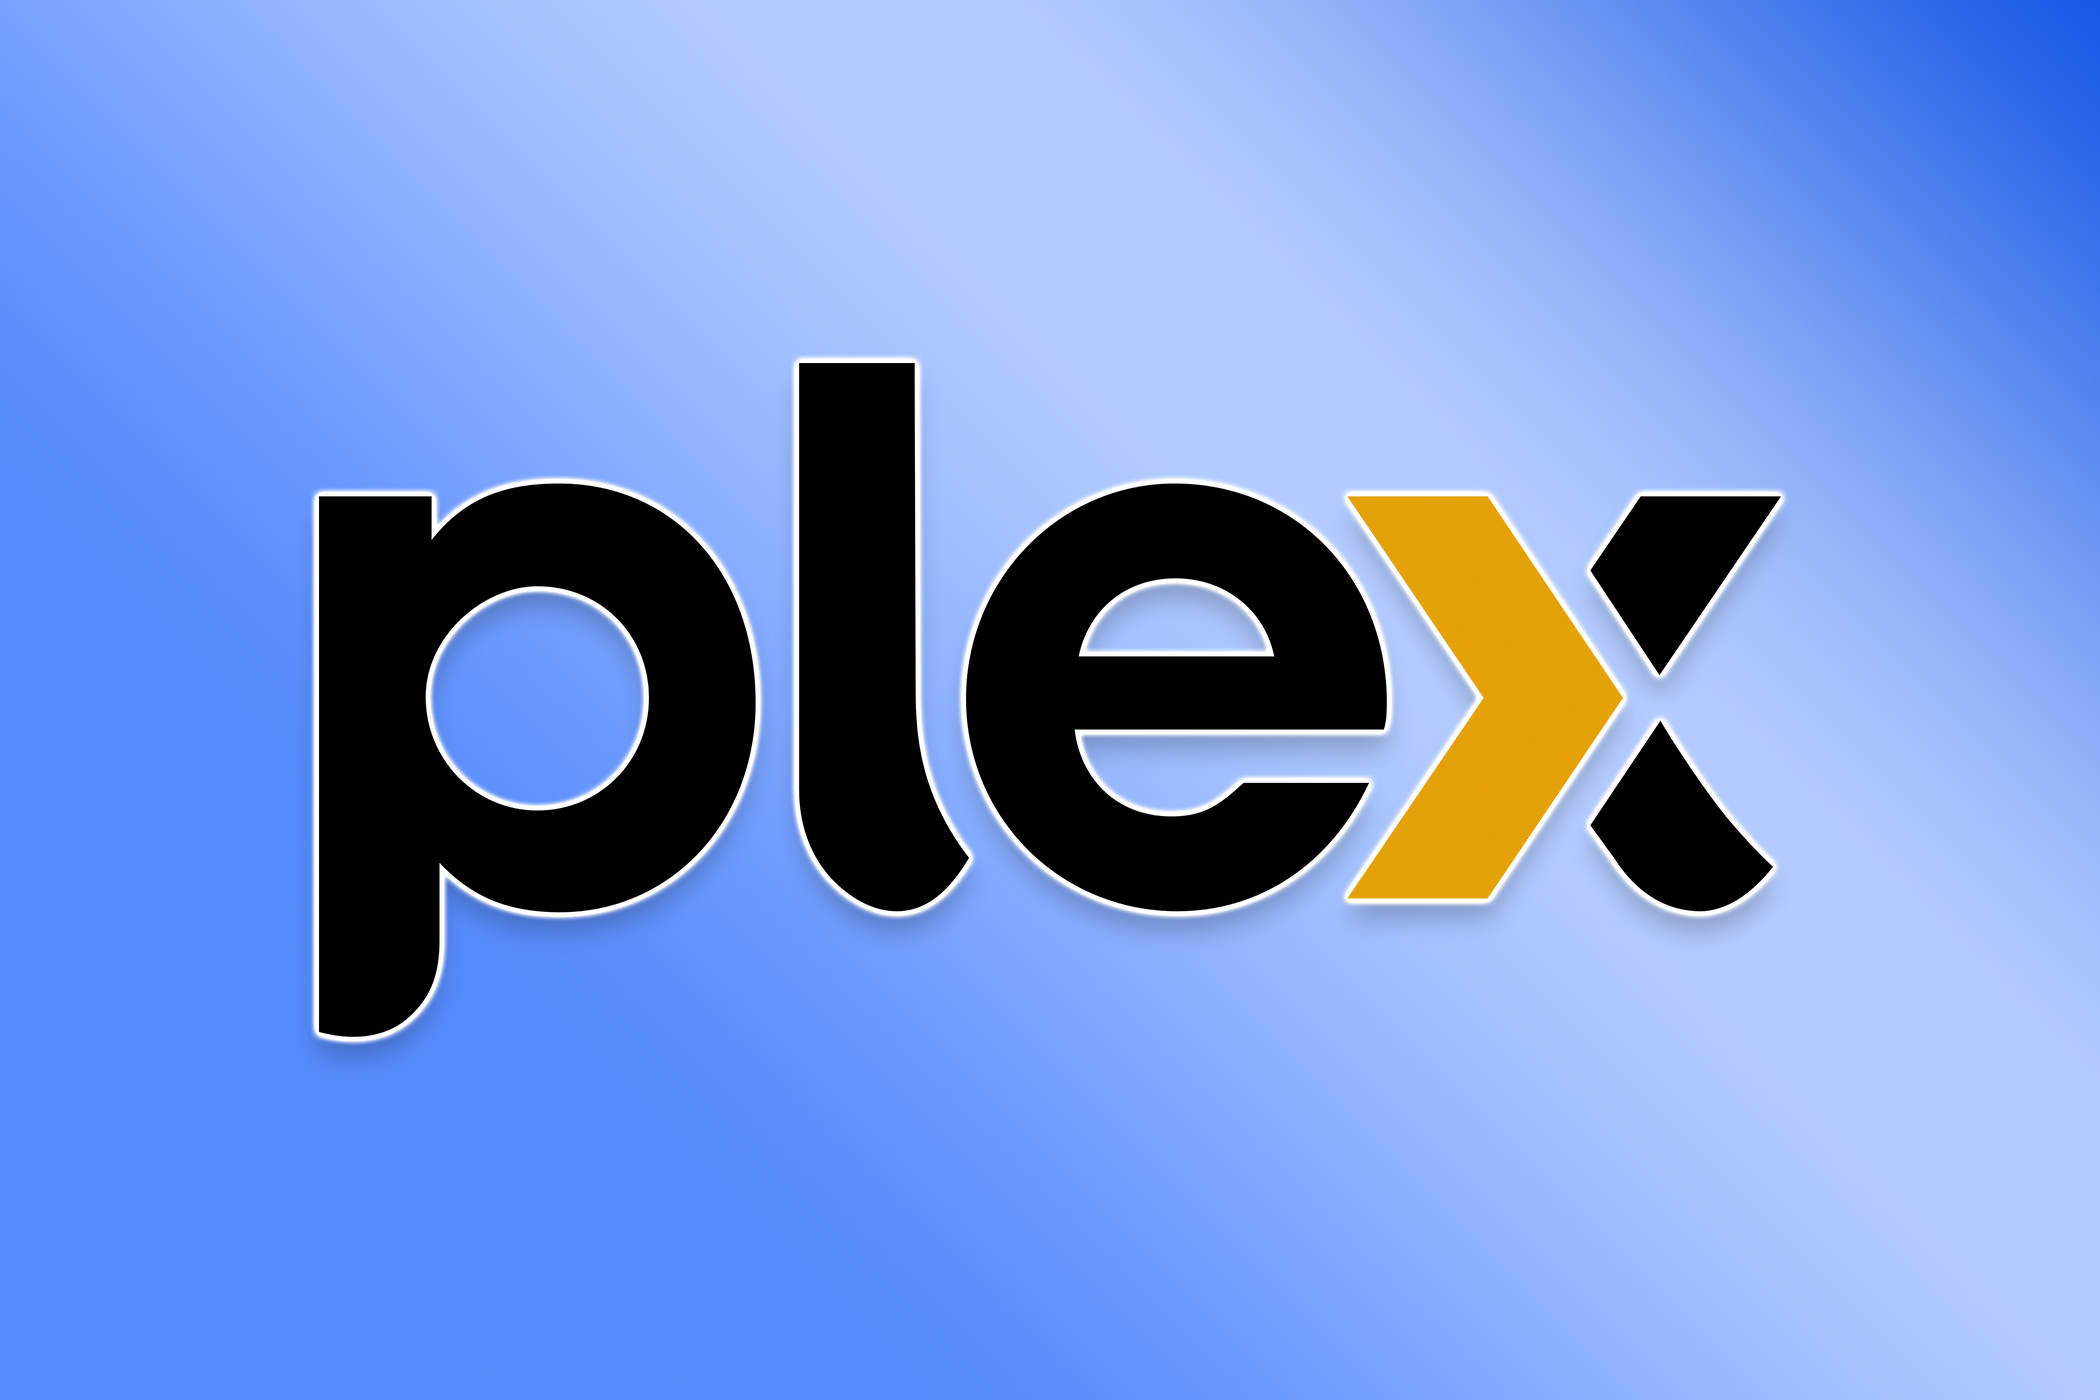 The Plex logo on a blue background.